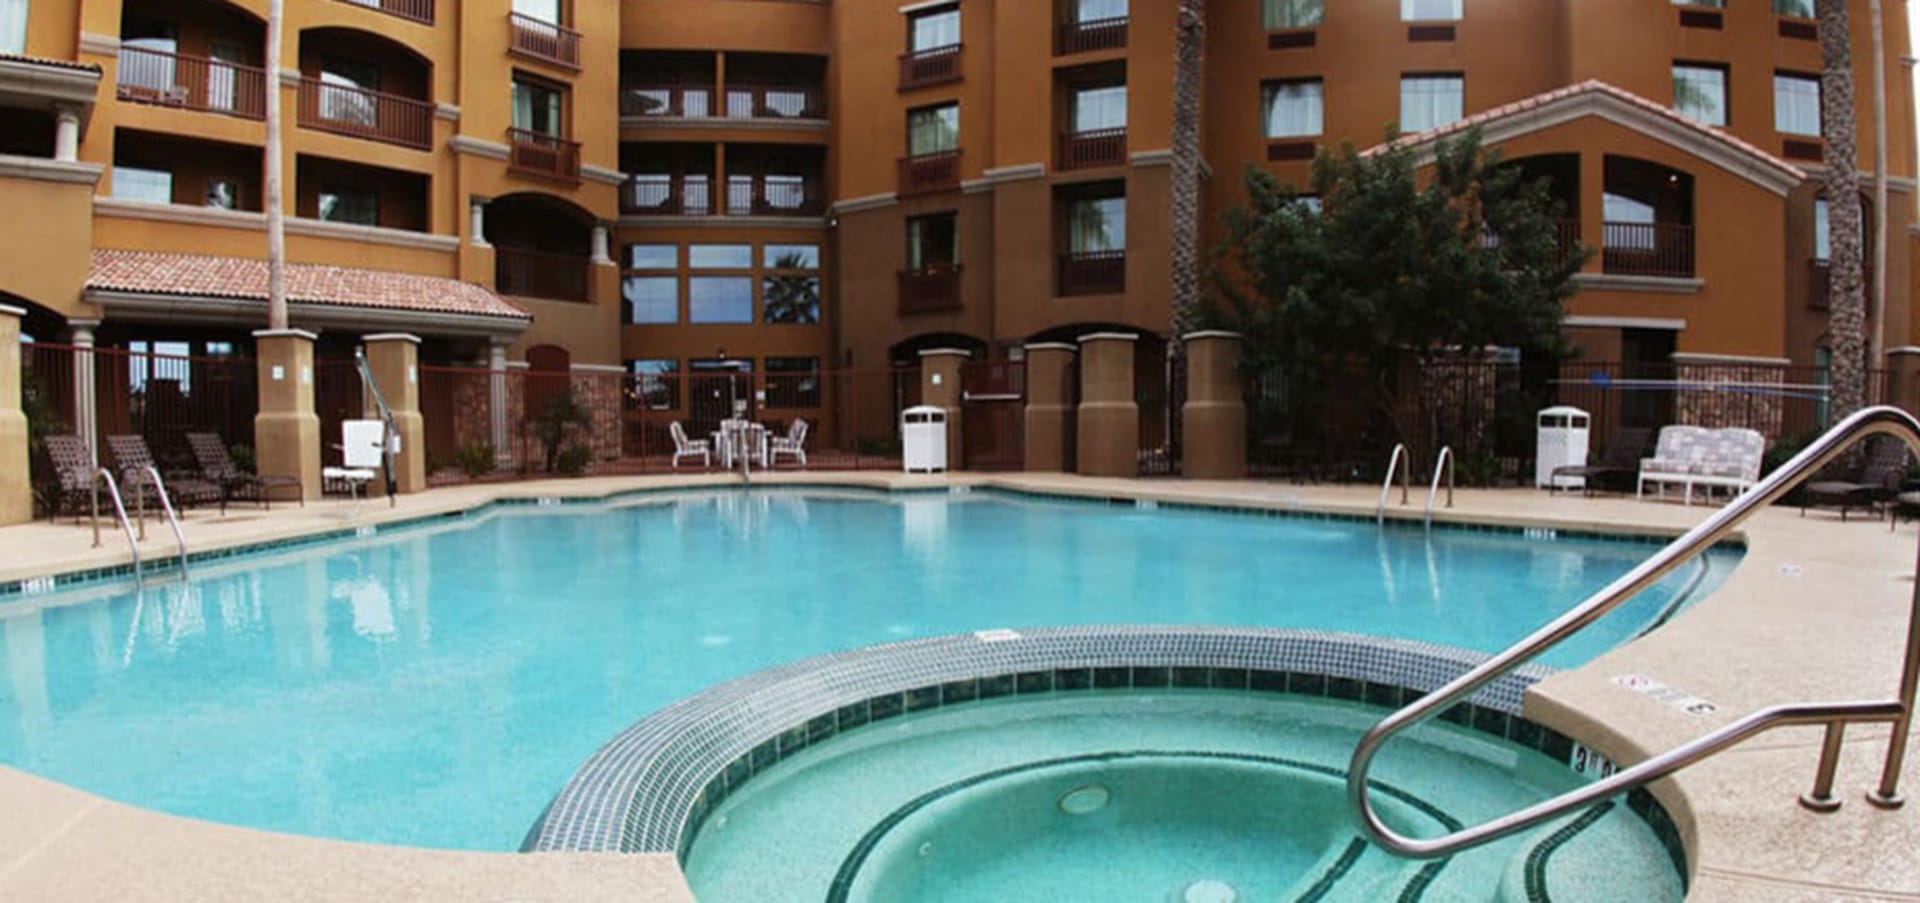 Holiday Inn at Ocotillo pool